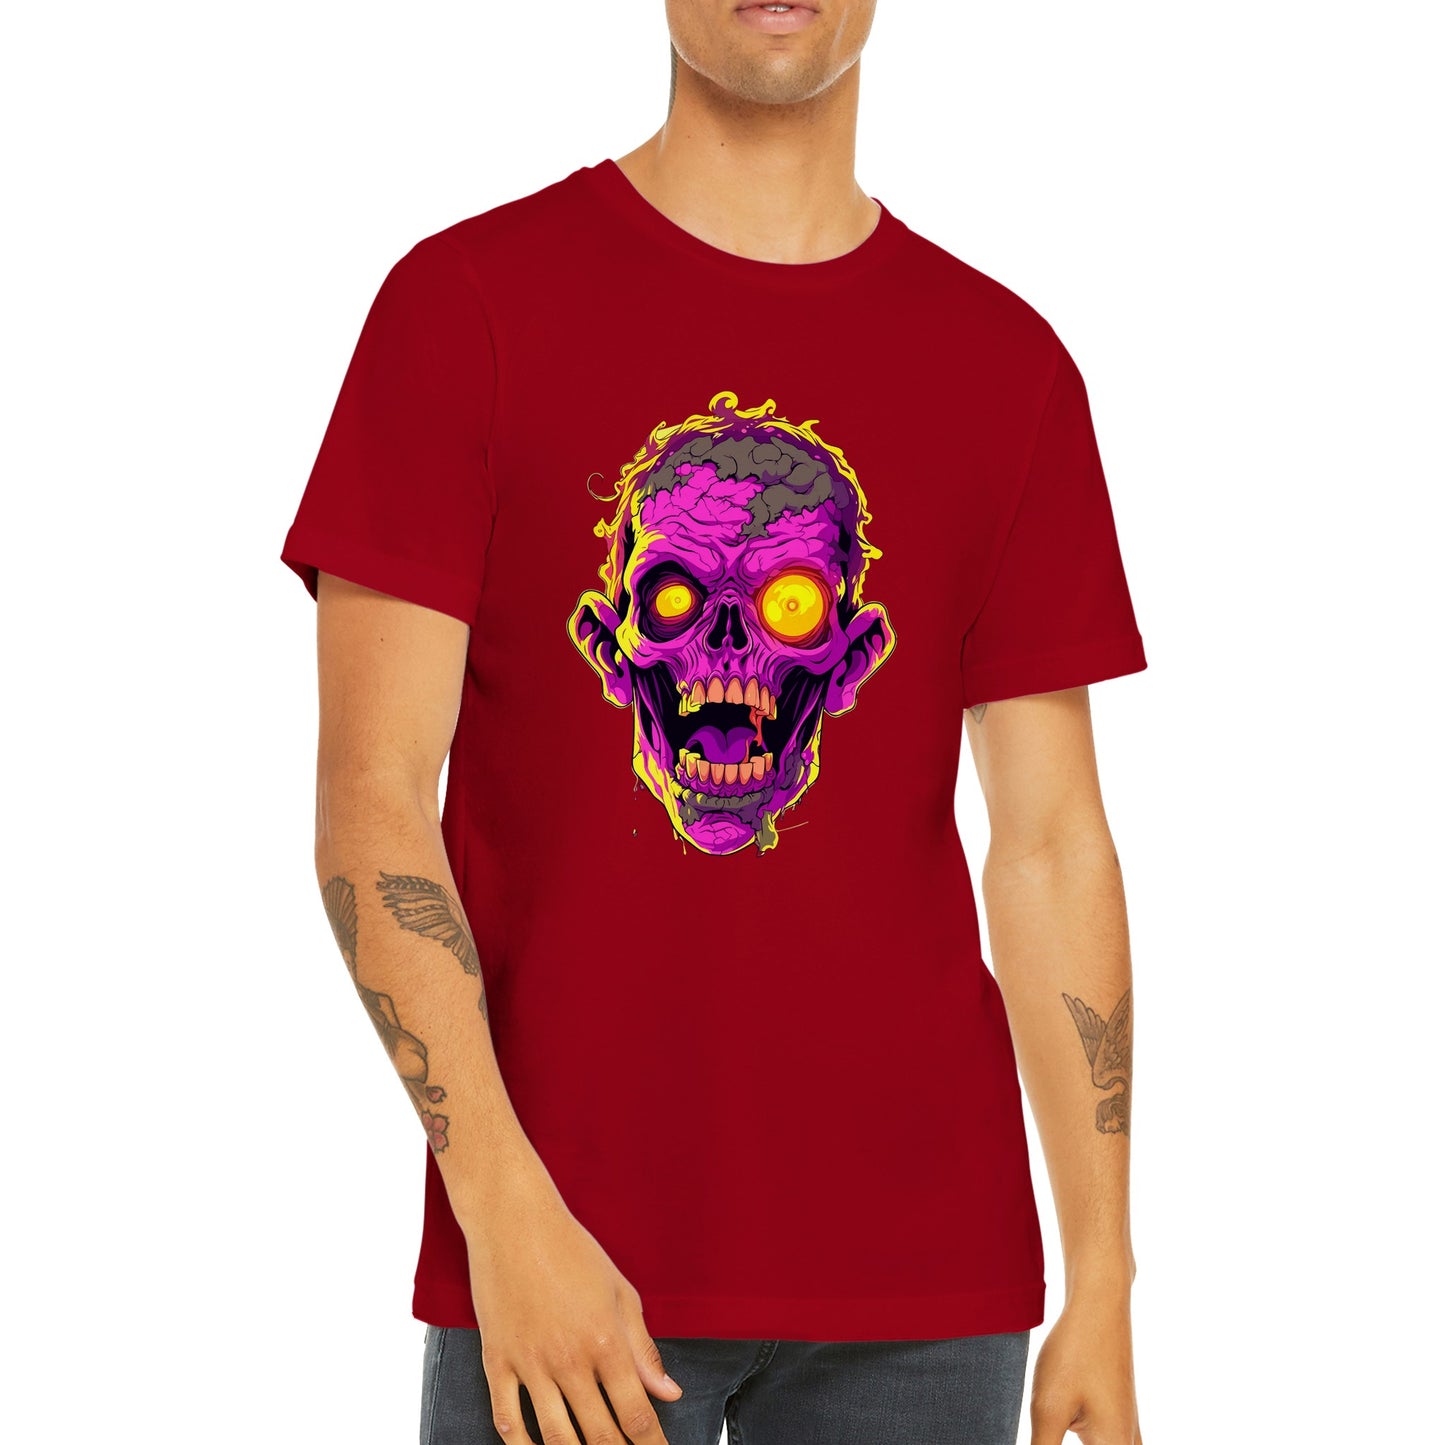 Zombie T-shirt